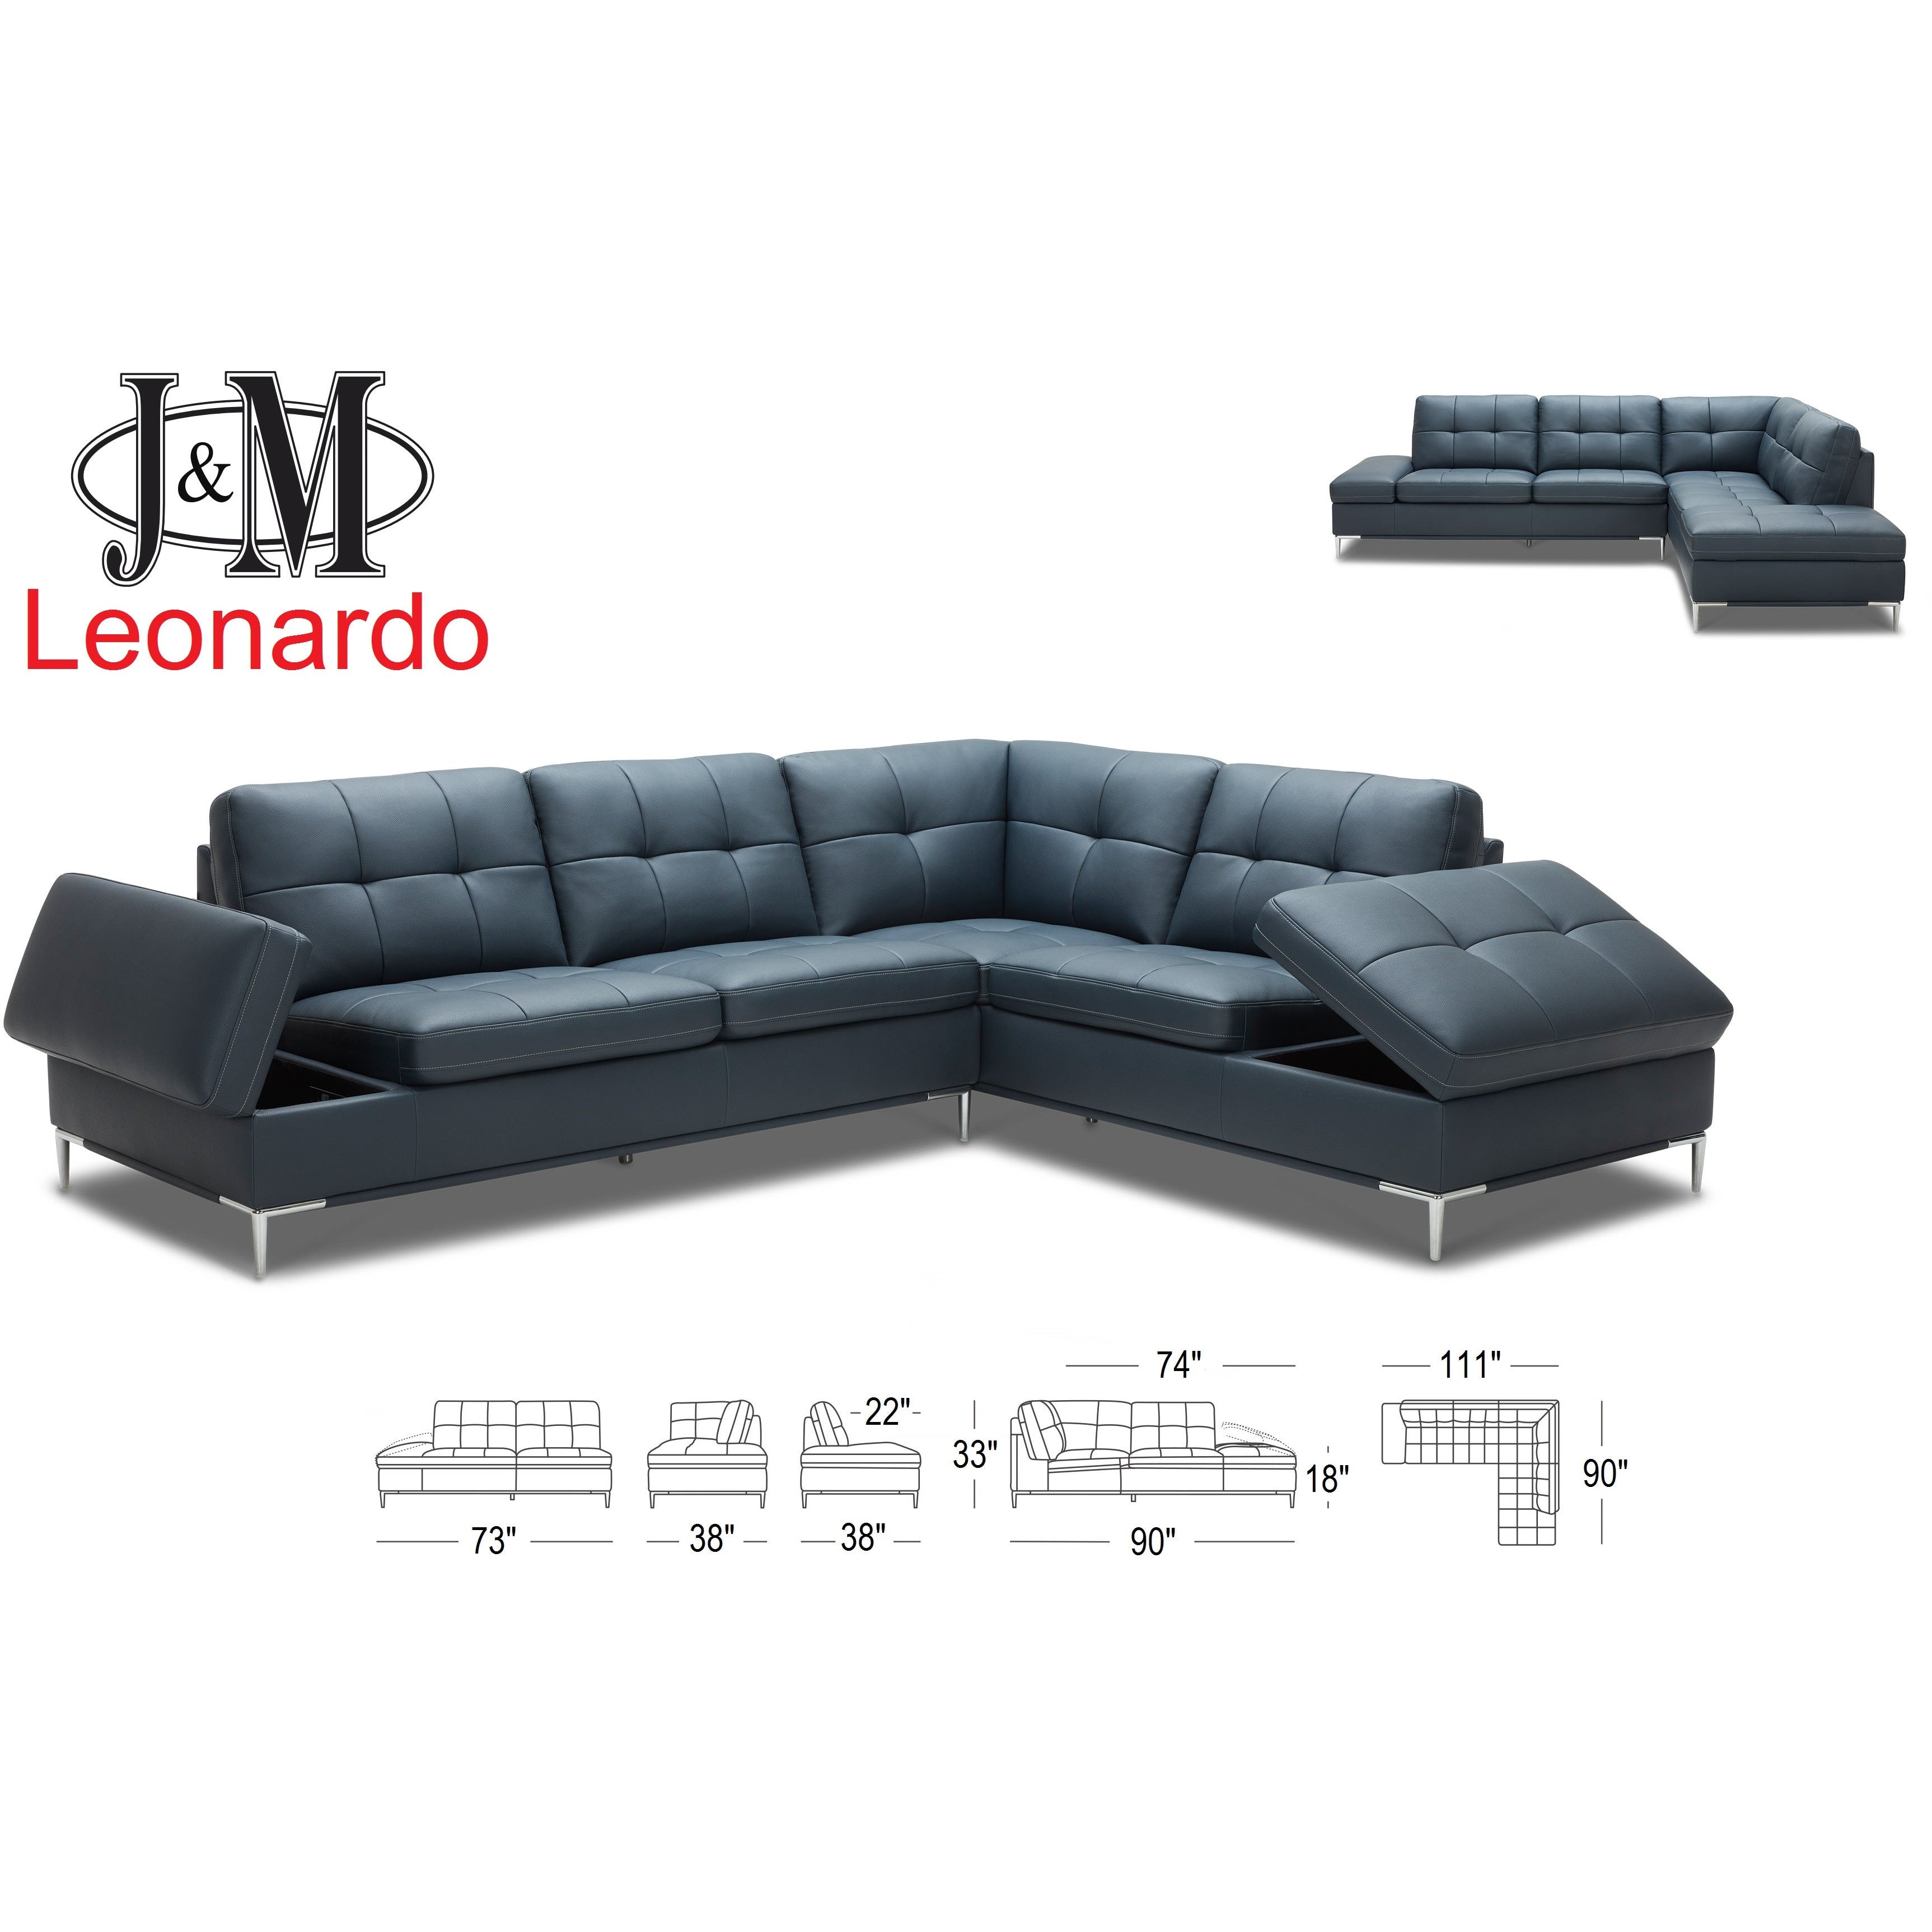 J&M Furniture Leonardo Sectional with Storage